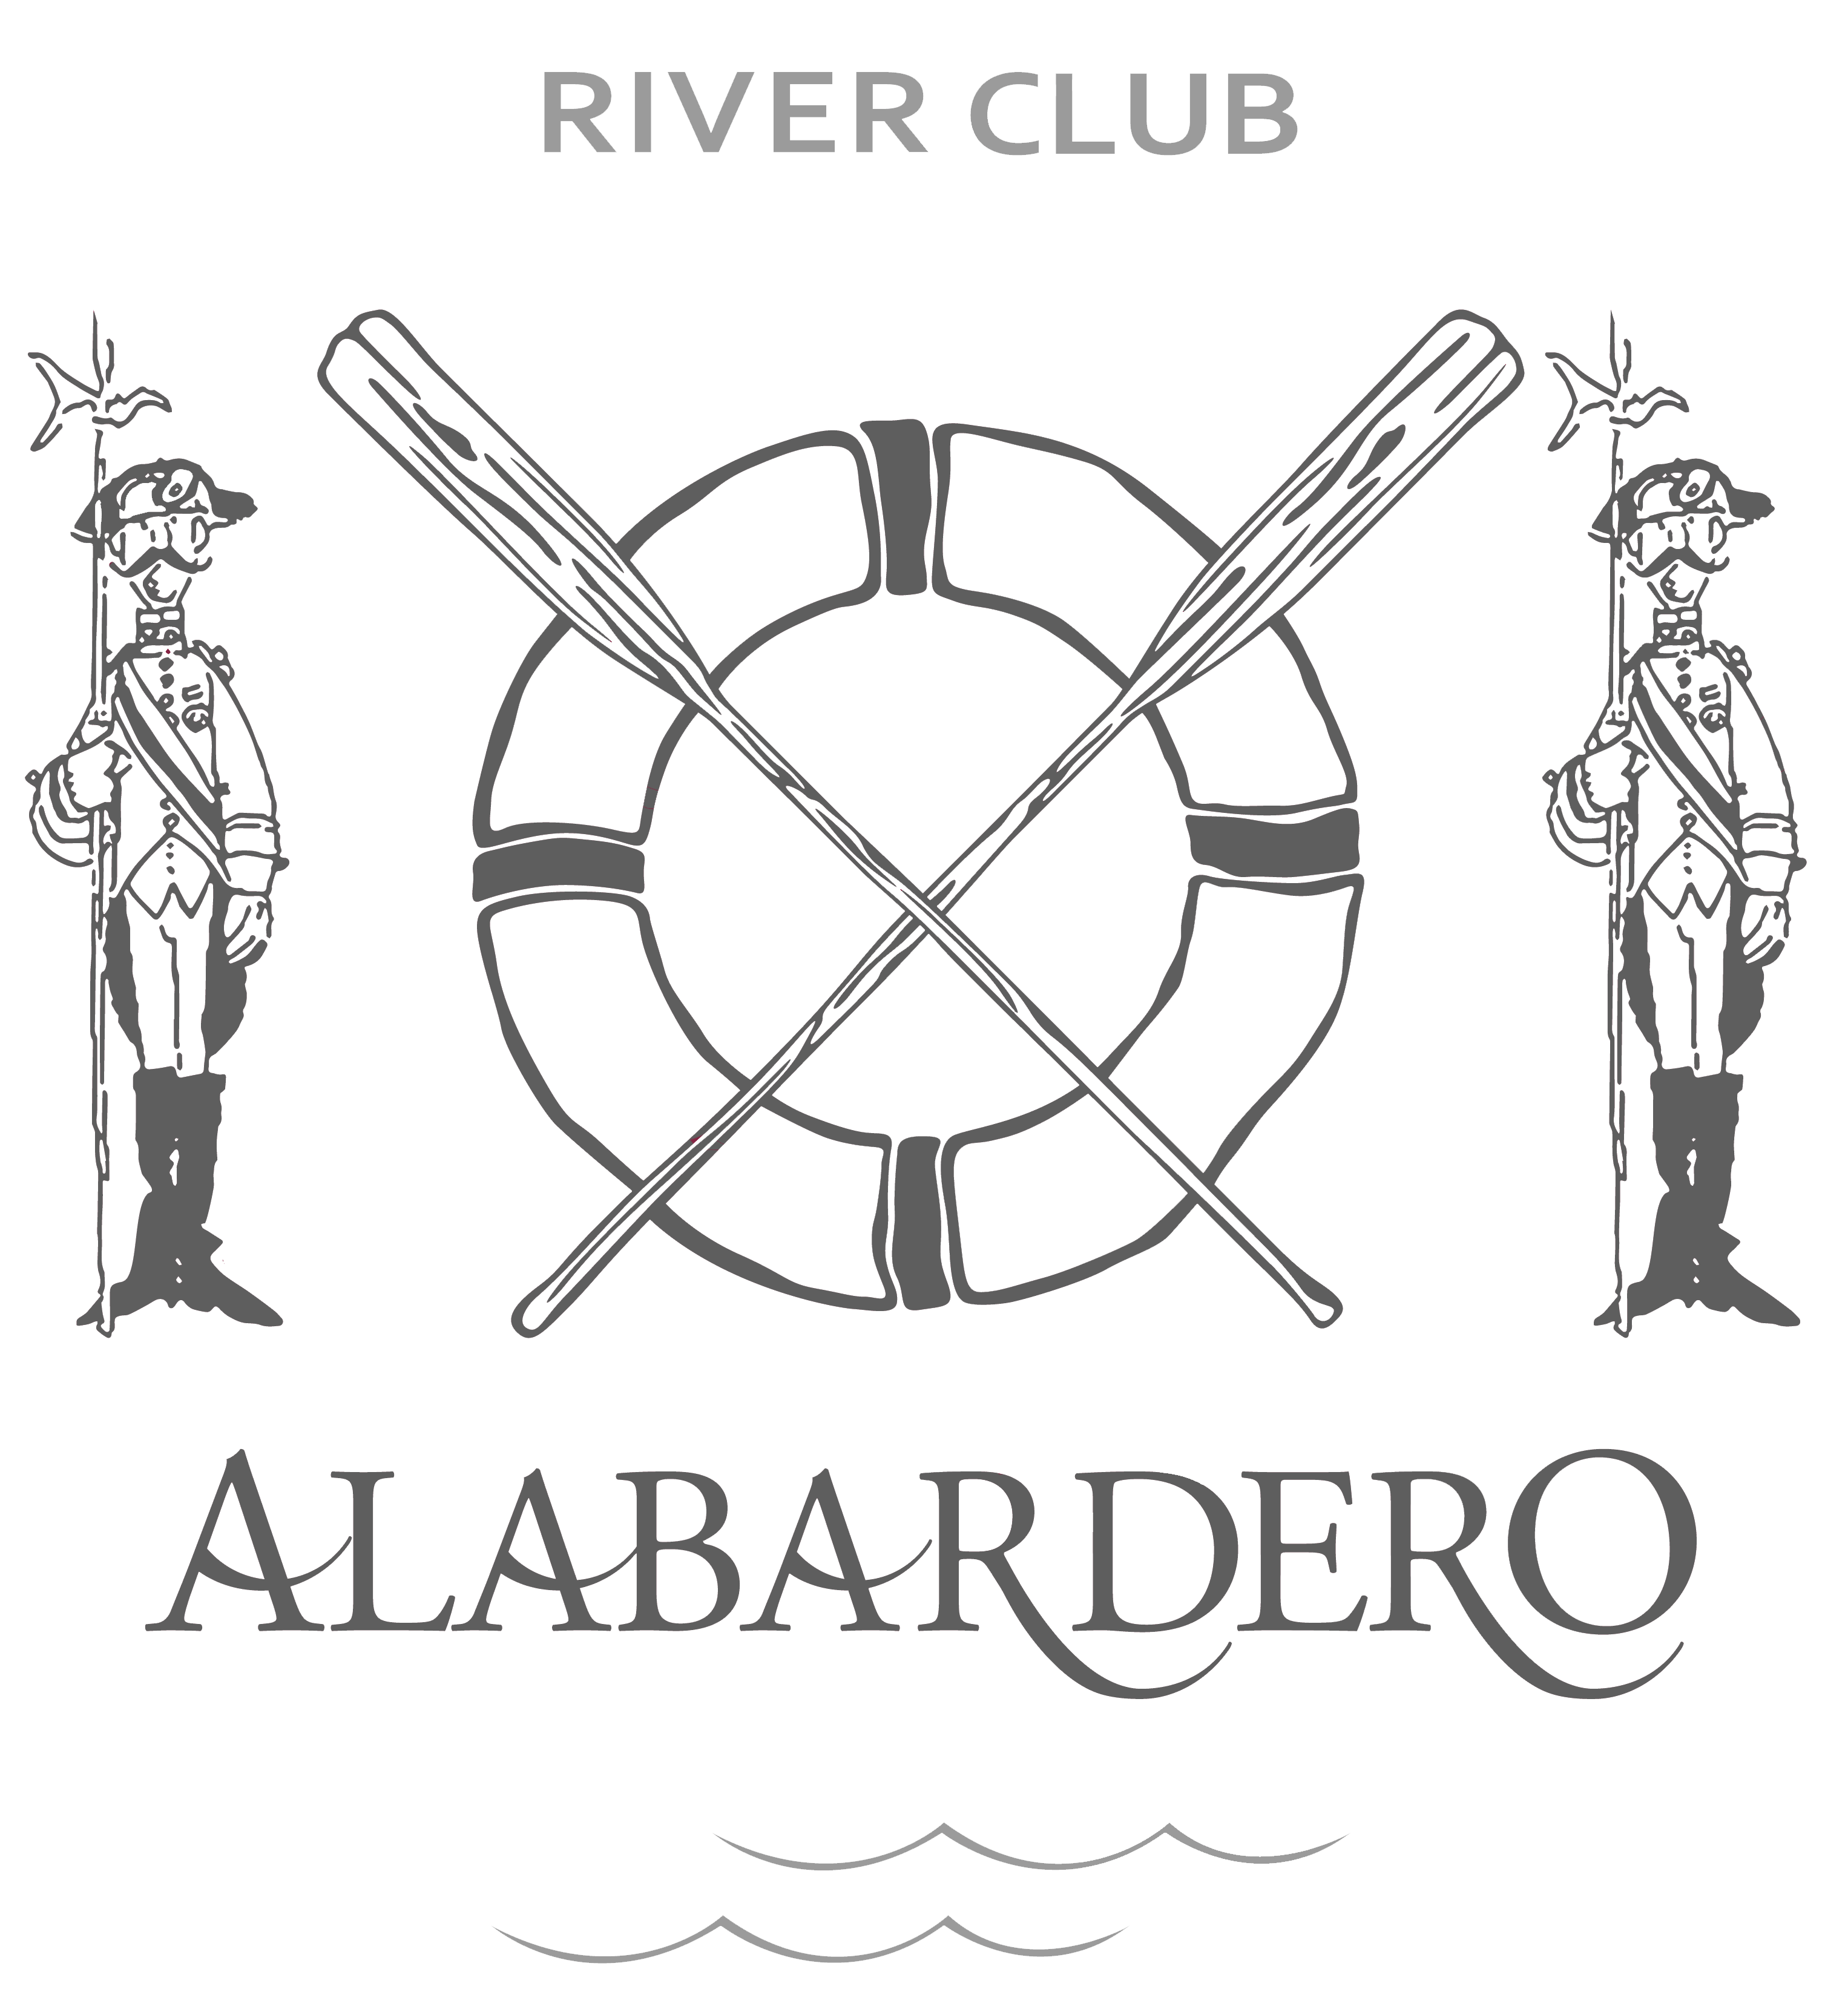 Alabardero River Club